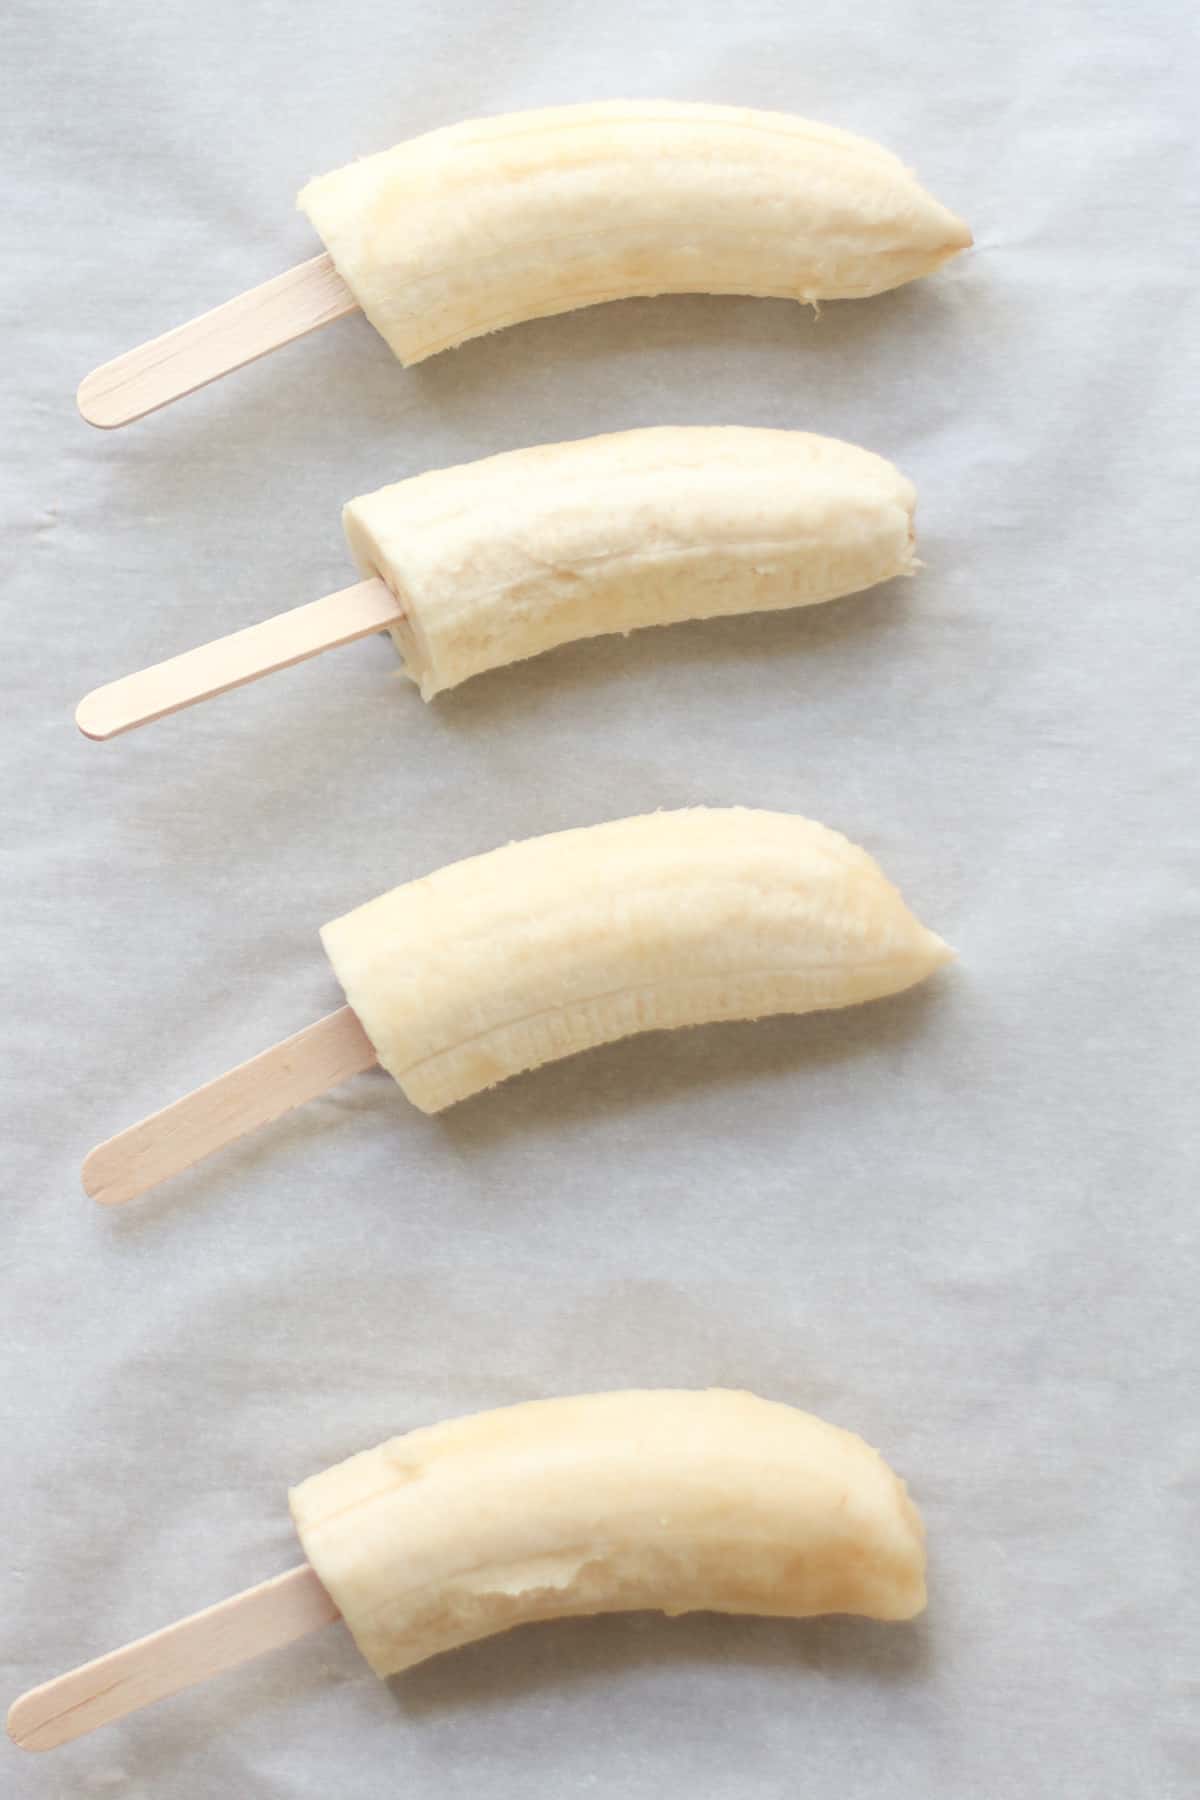 4 Banana halves with popsicle sticks.